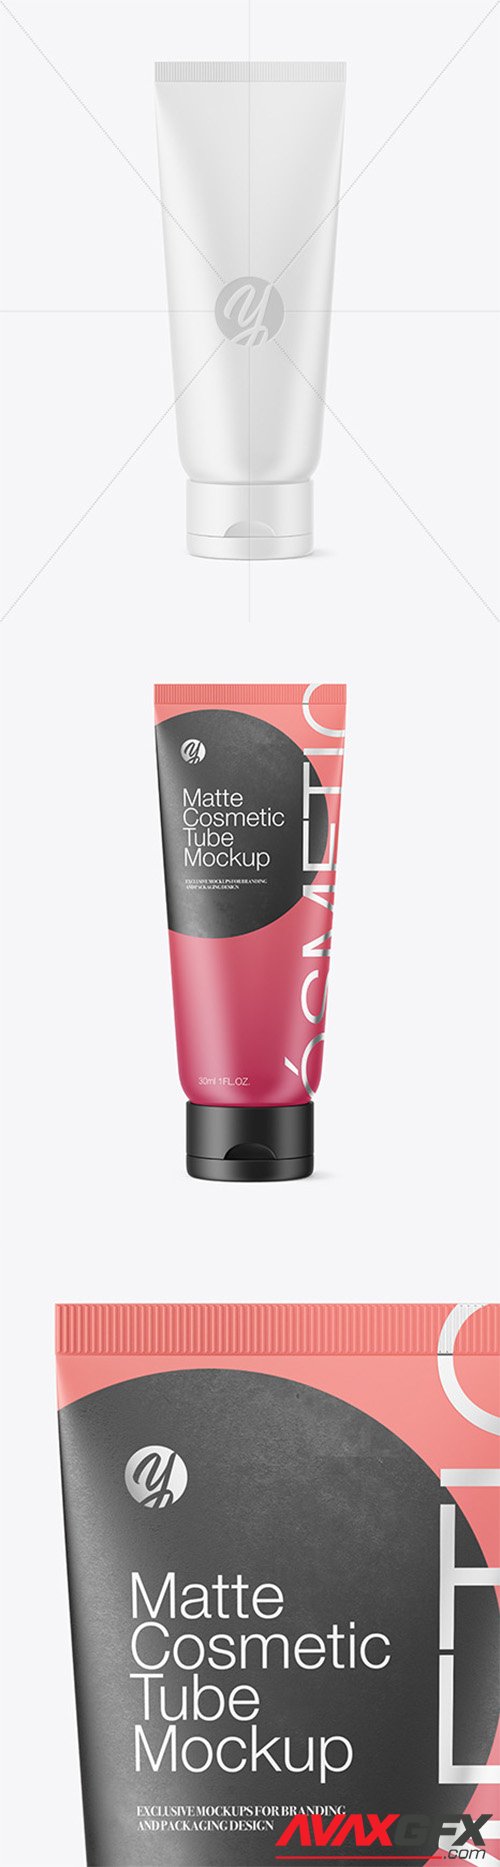 Matte Cosmetic Tube Mockup 64824